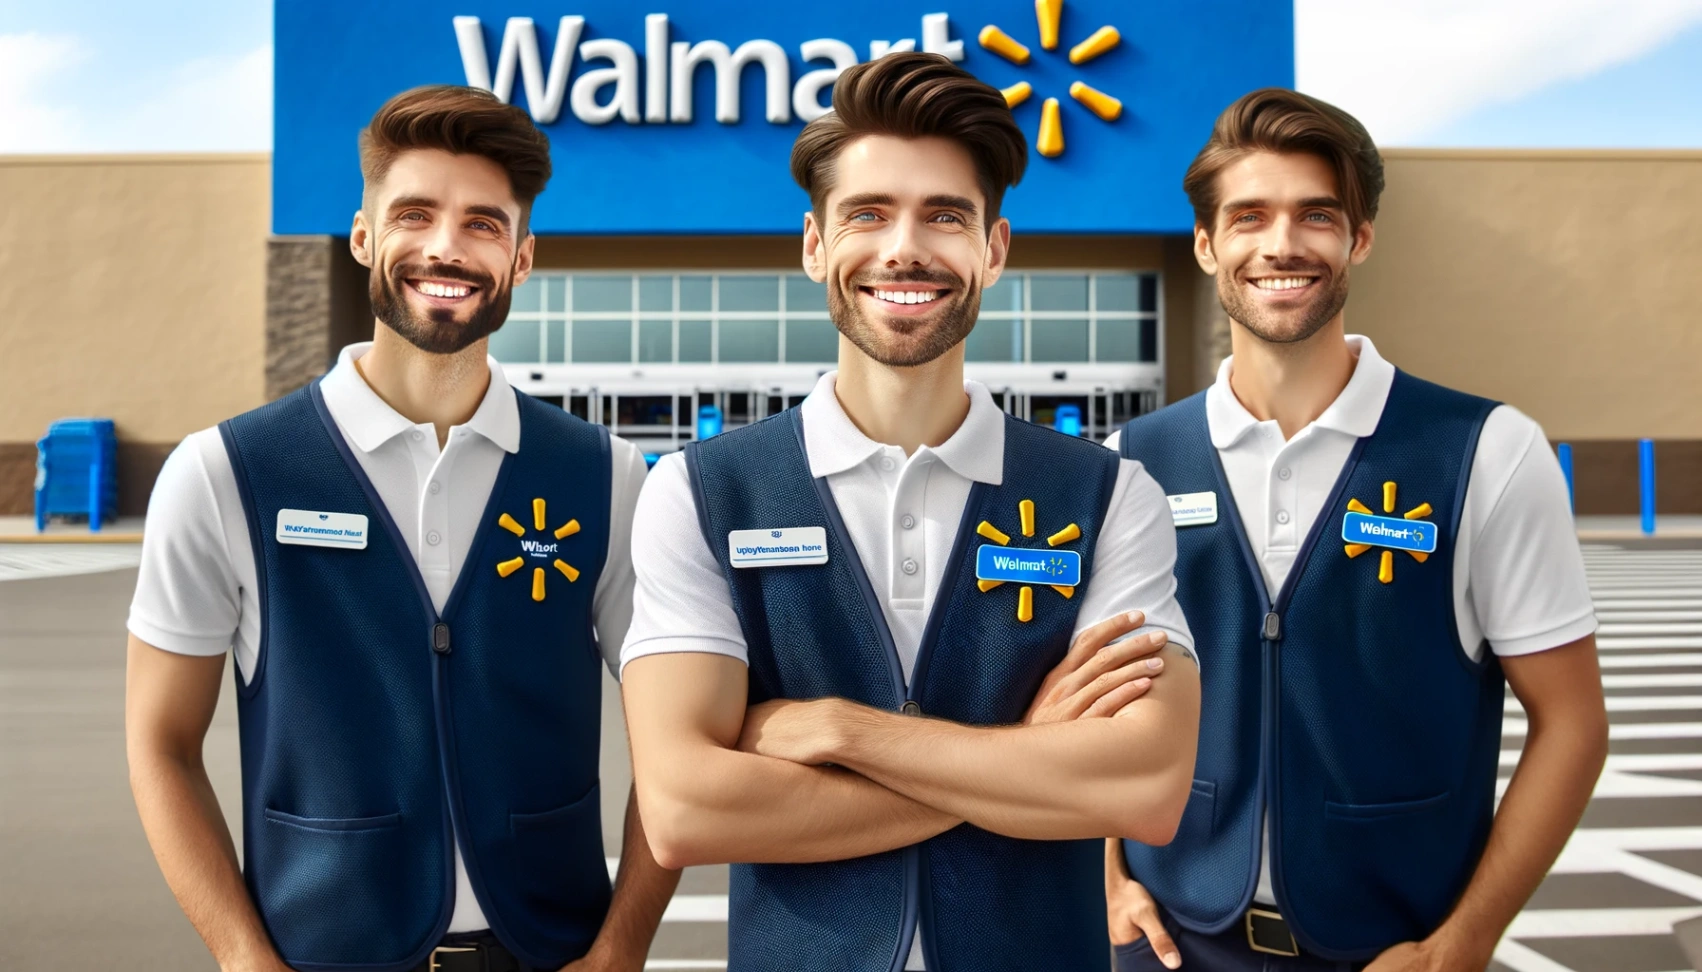 Vagas de emprego no Walmart - Saiba como se candidatar online